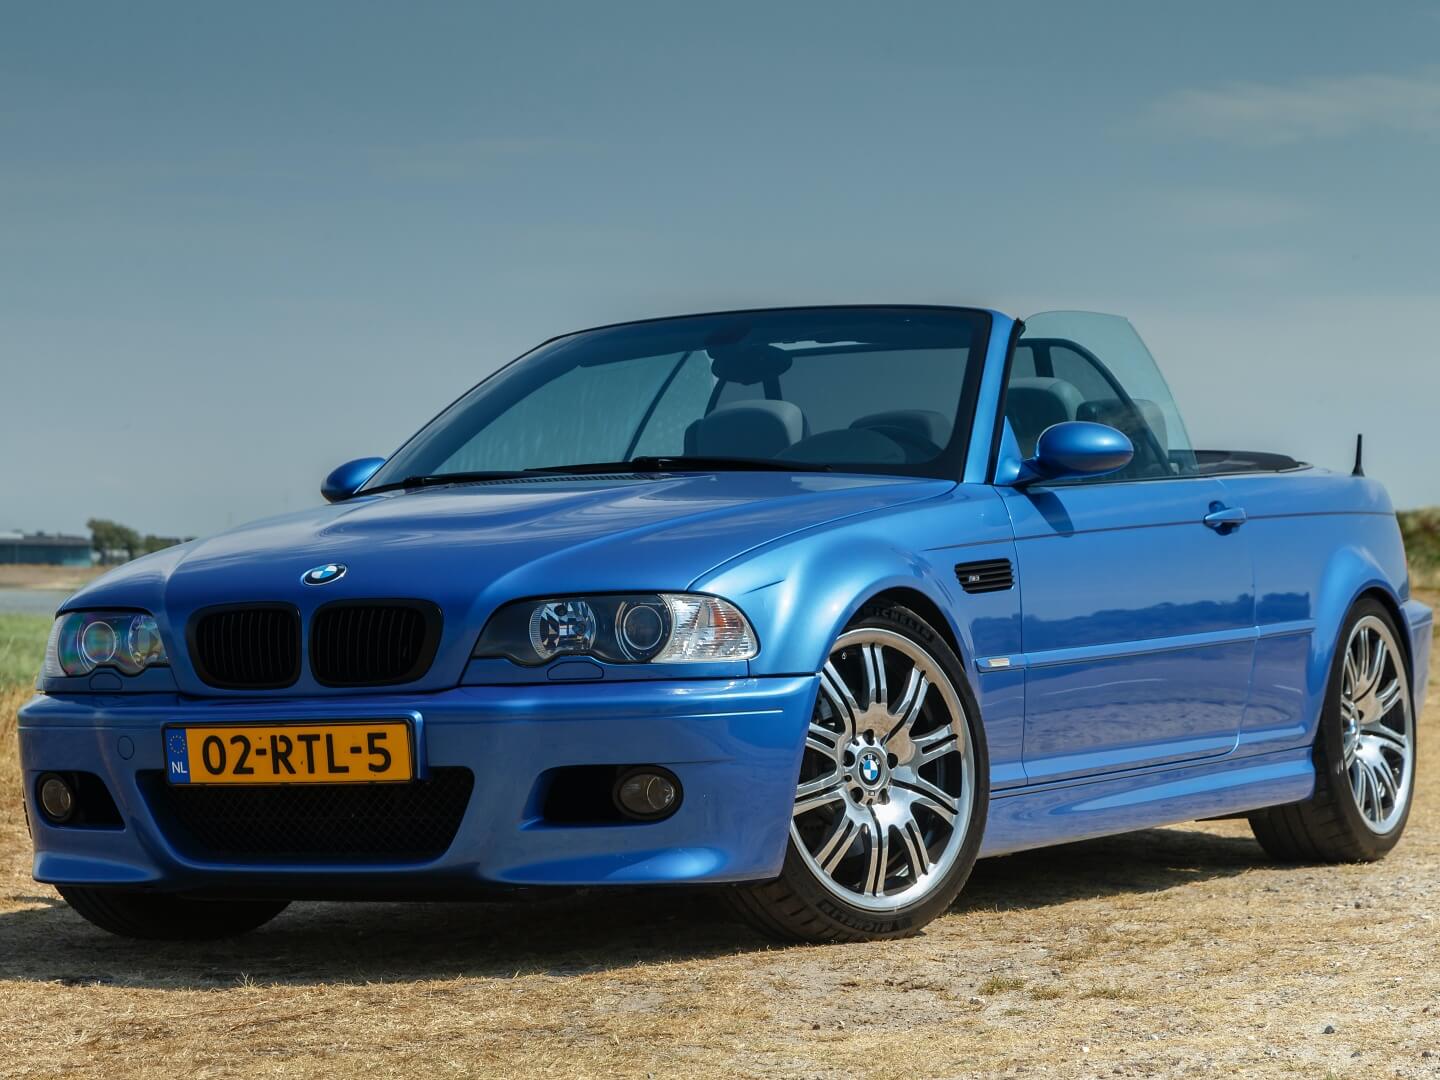 BMW 1er M Coupé Youngtimer Klassiker Potenzial! (verkauft)